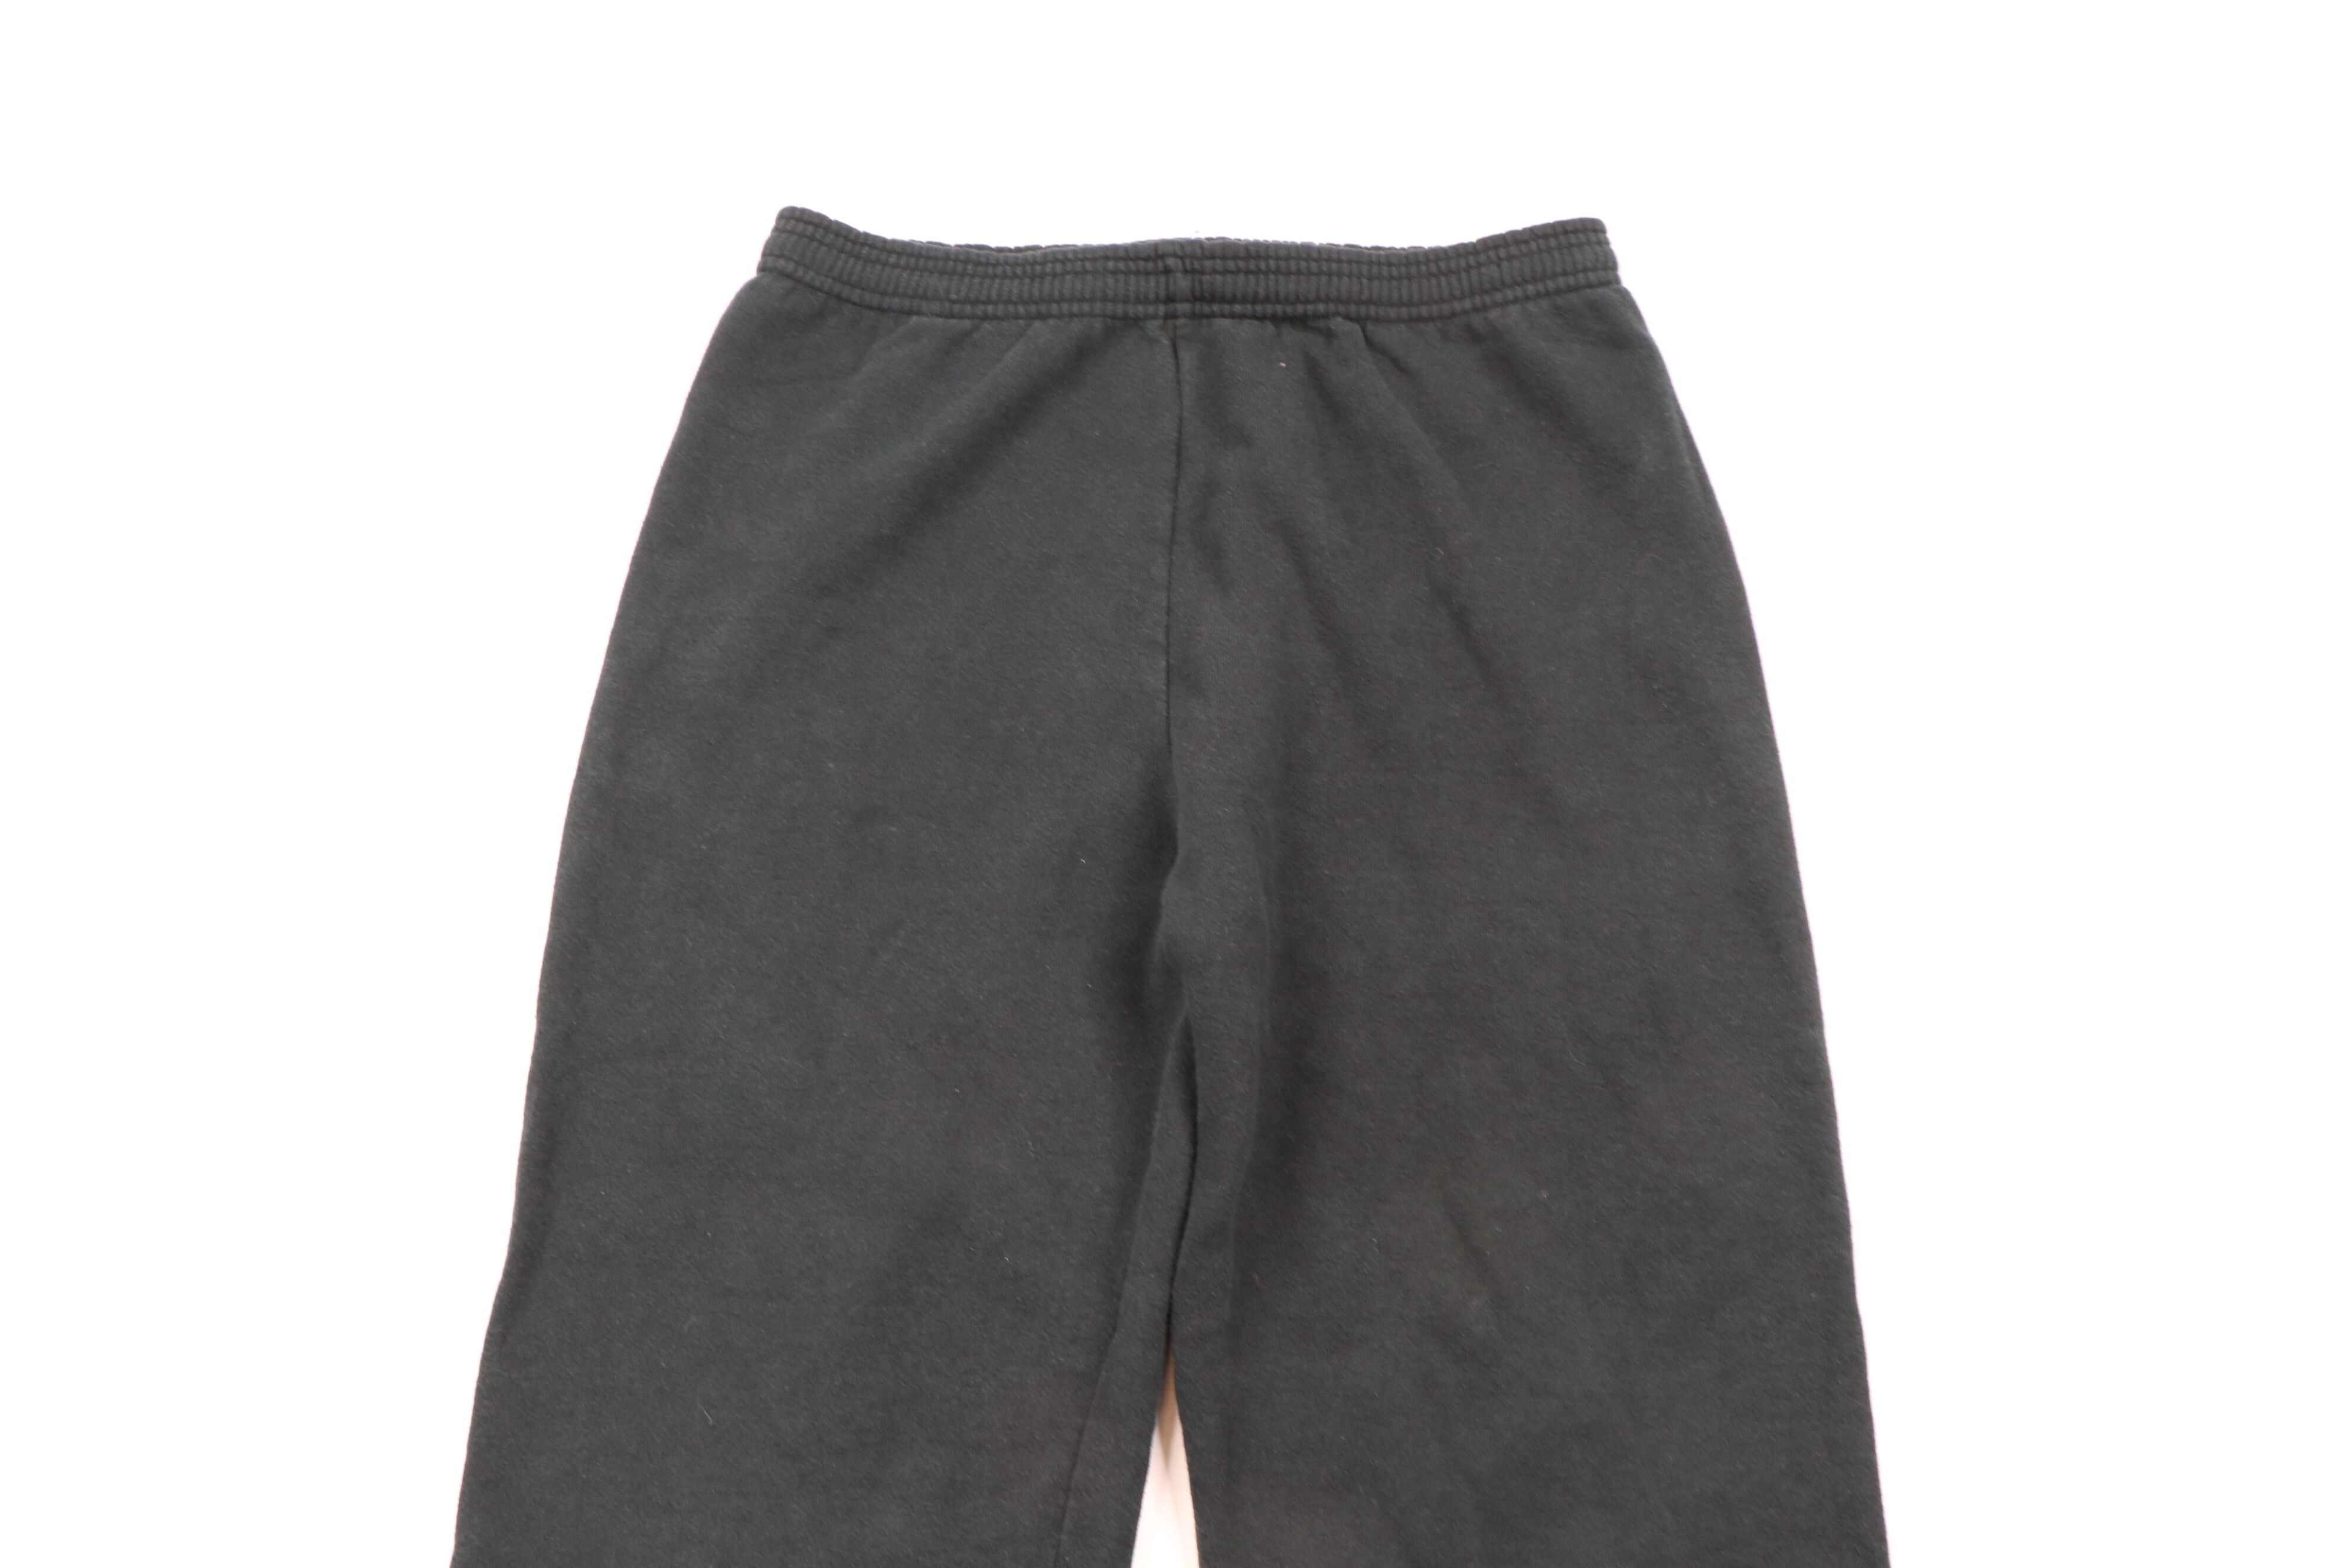 Vintage Vintage 90s Streetwear Faded Blank Sweatpants Joggers Pants Size US 36 / EU 52 - 2 Preview